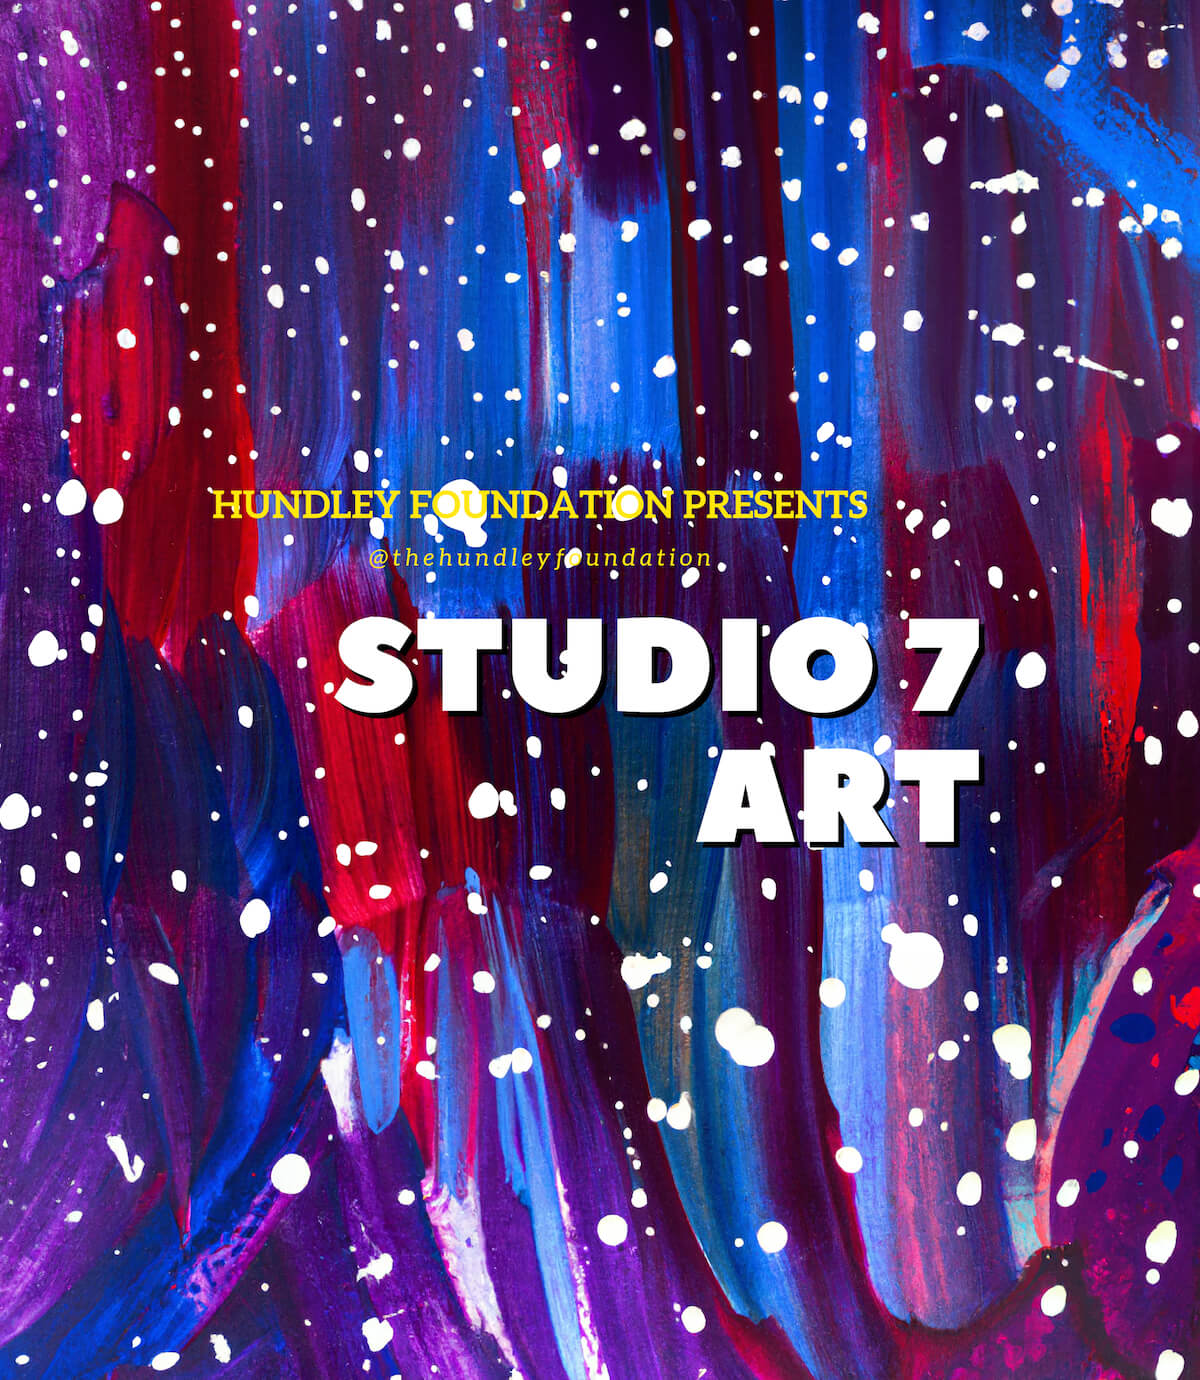 Hundley Foundation Presents: Studio 7 Art